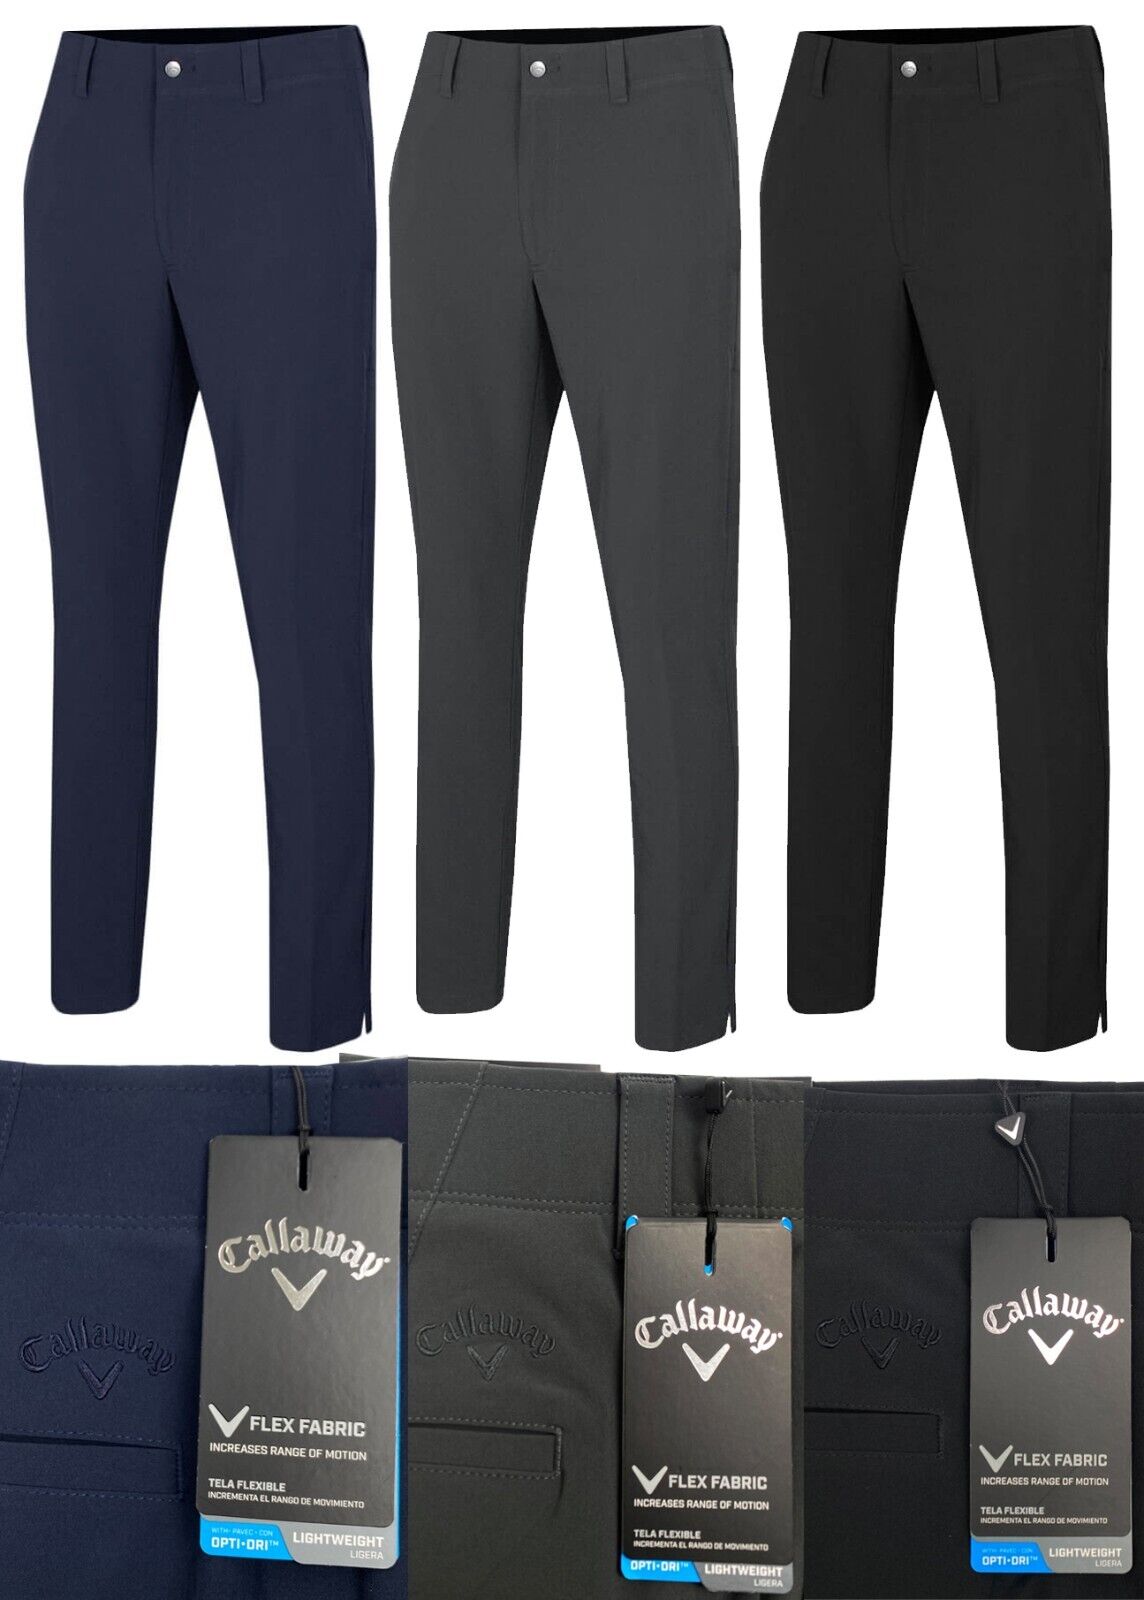 Callaway Mens Lightweight Golf Trousers Black 32x30 4 Way stretch Moisture   eBay